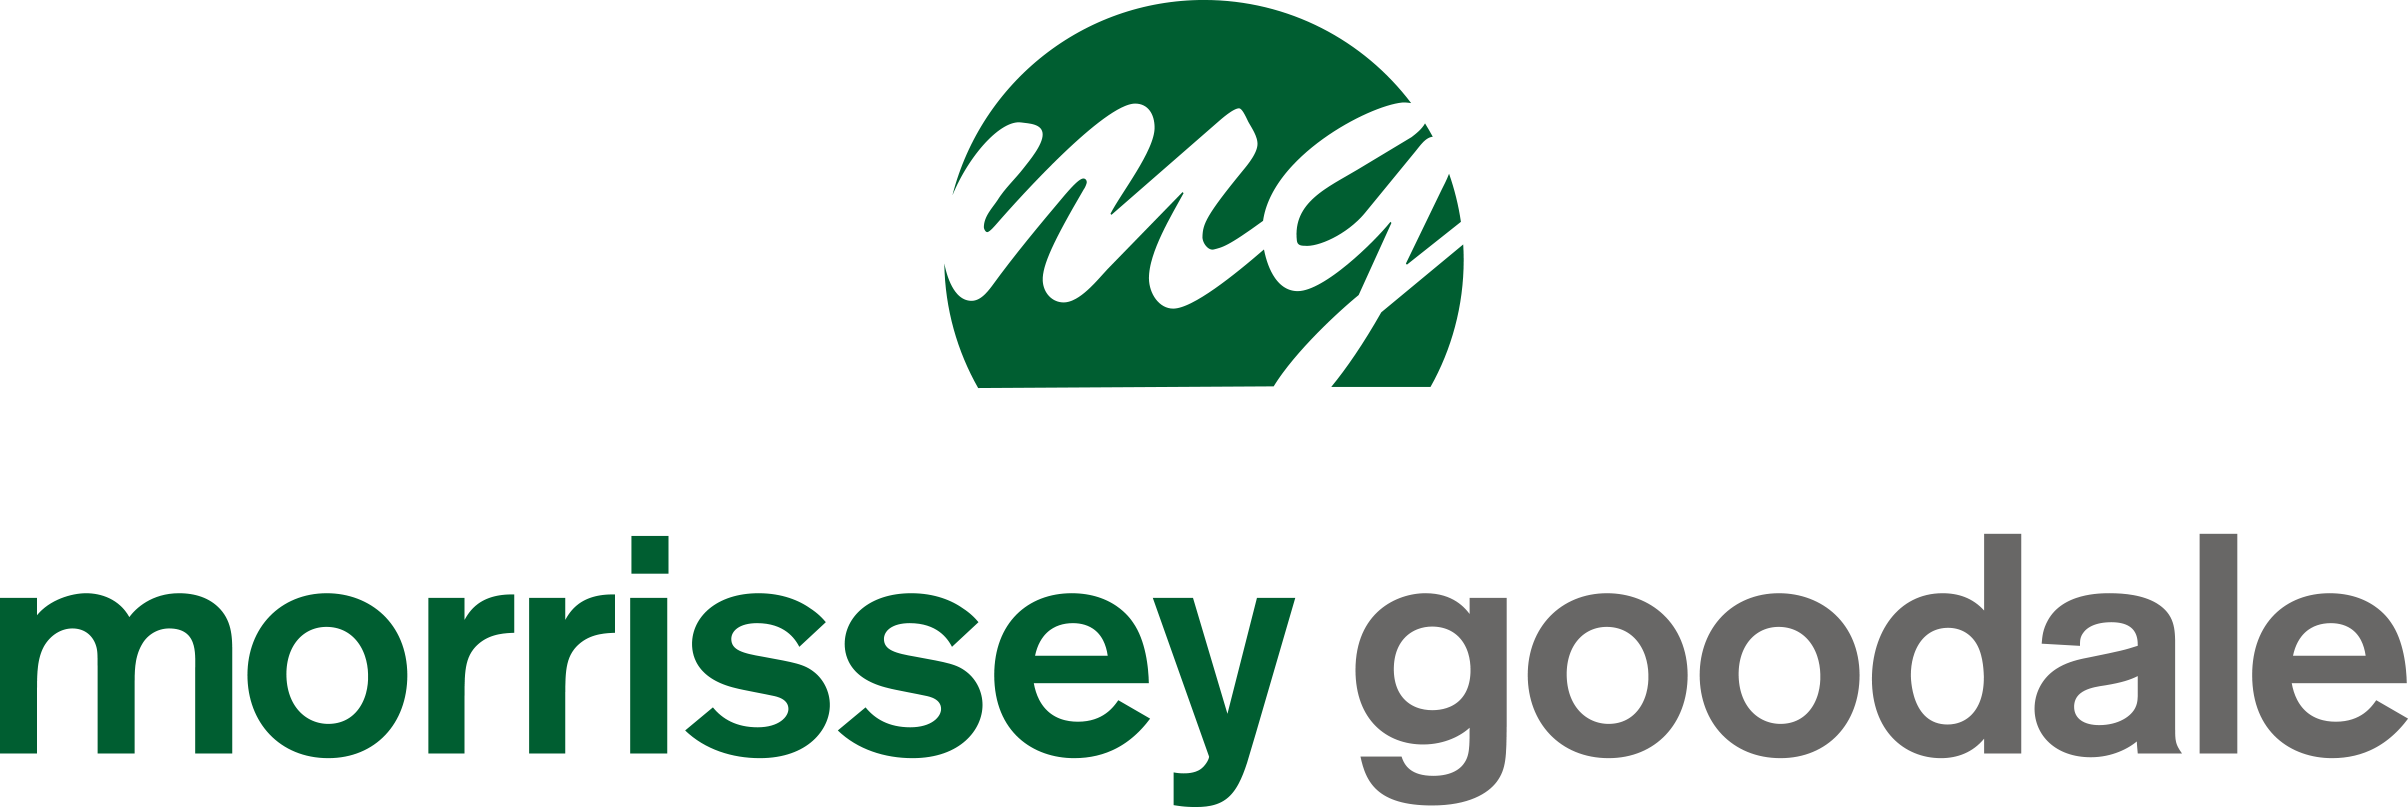 Morrissey_Goodale_Logos_Stacked_RGB 2022